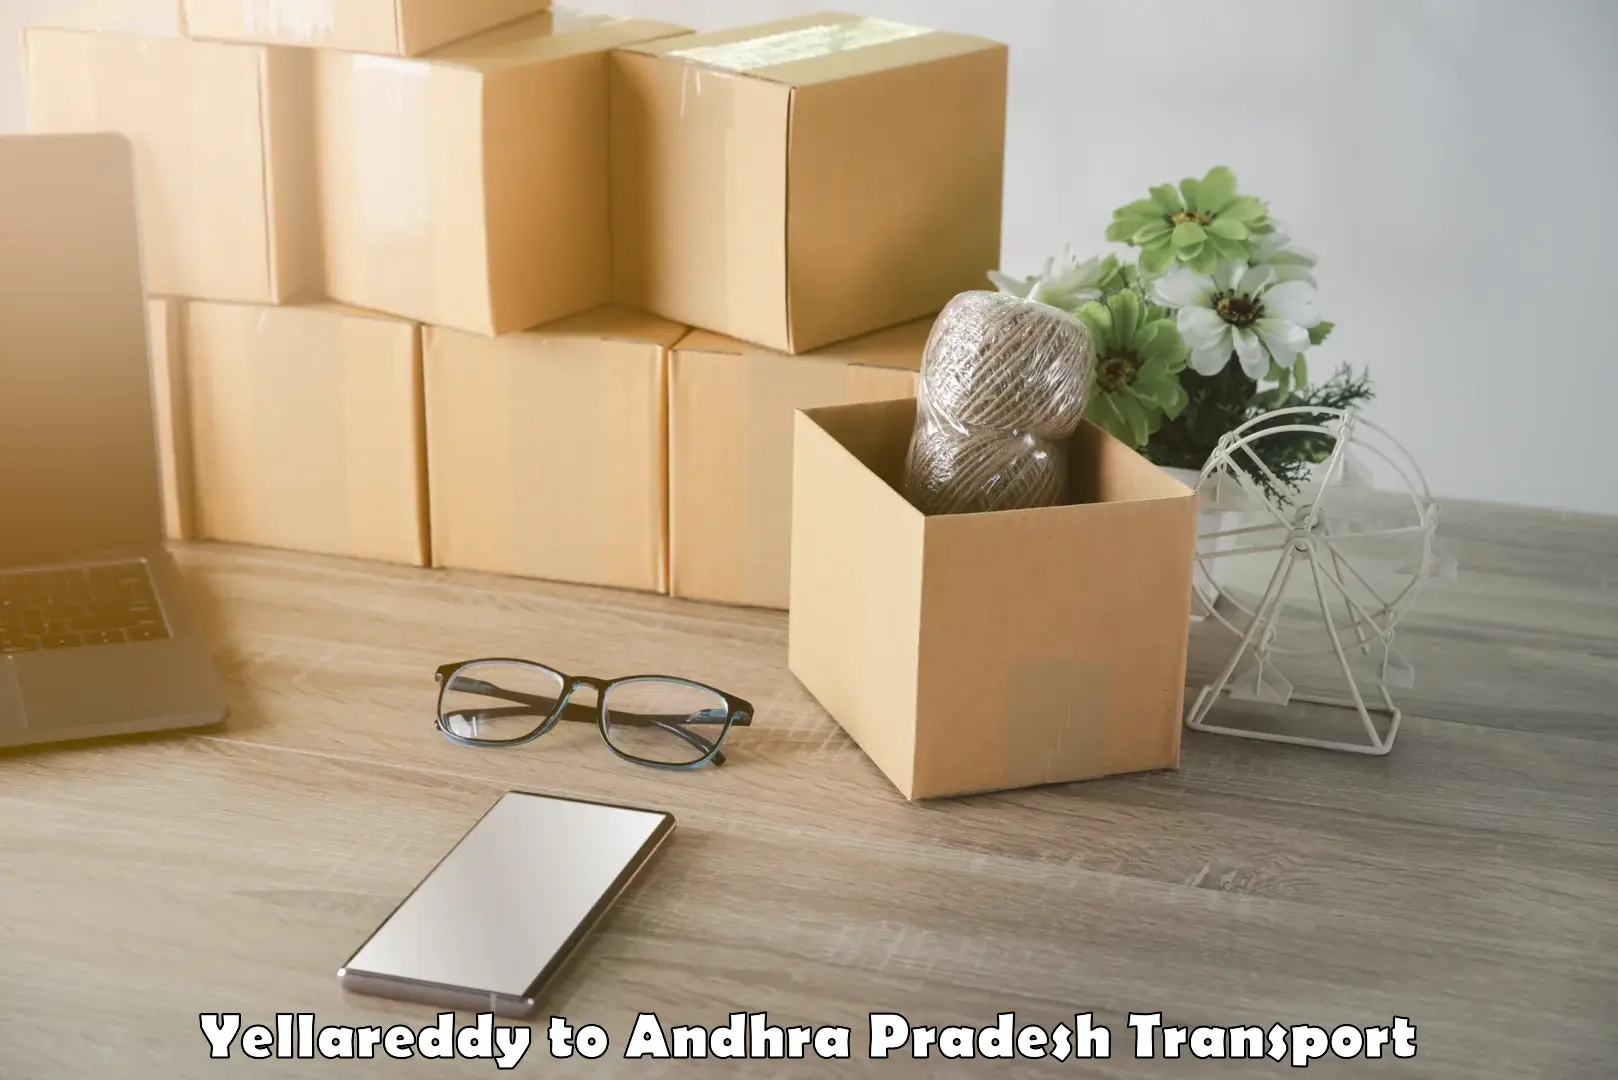 Transport shared services Yellareddy to Andhra Pradesh